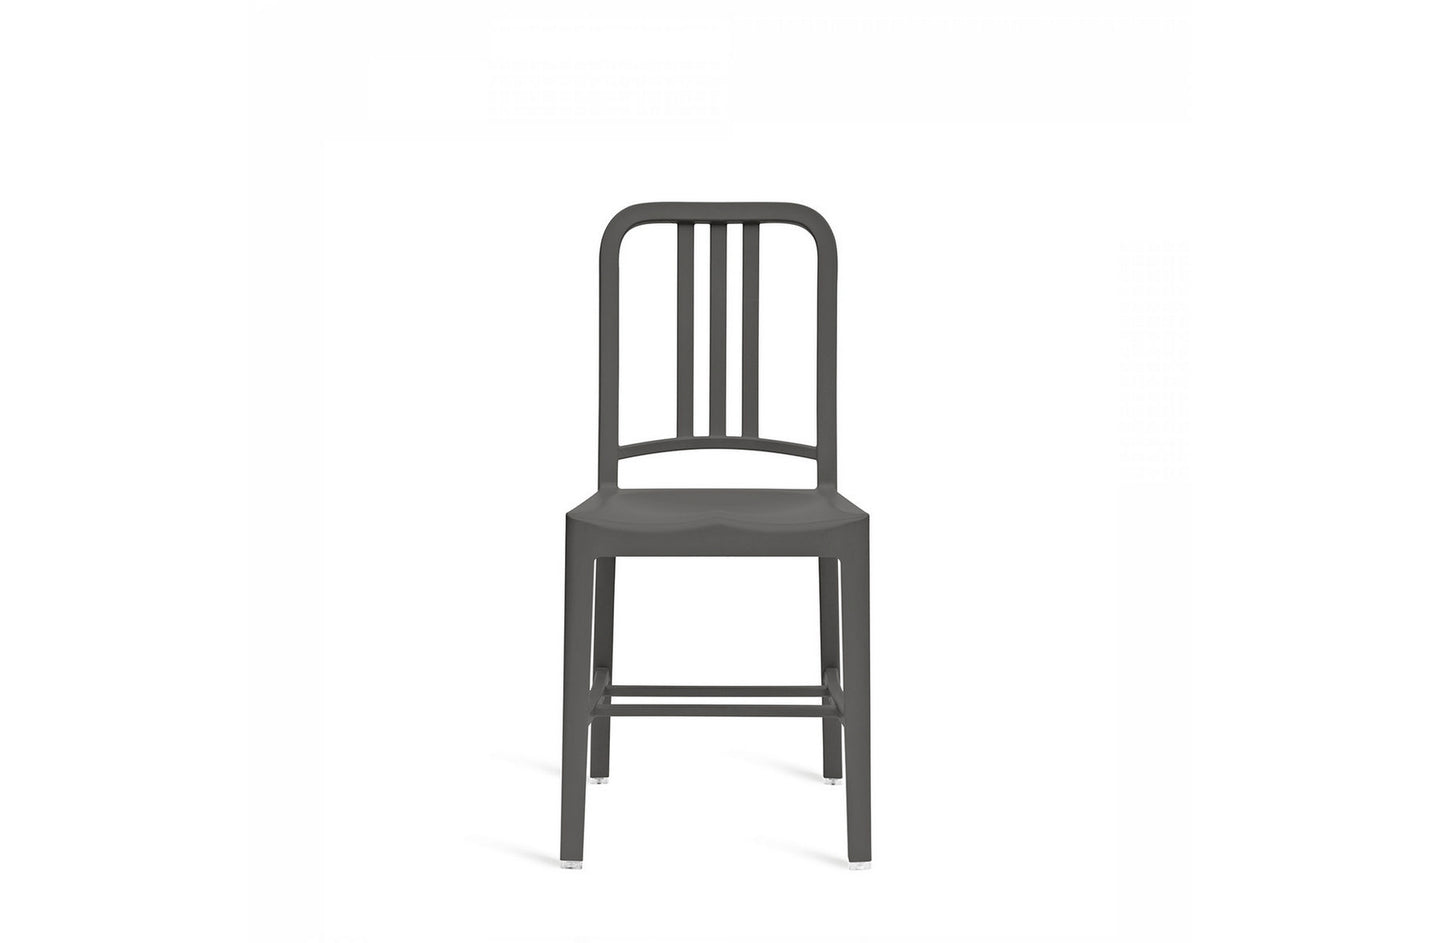 111 Navy Chair
